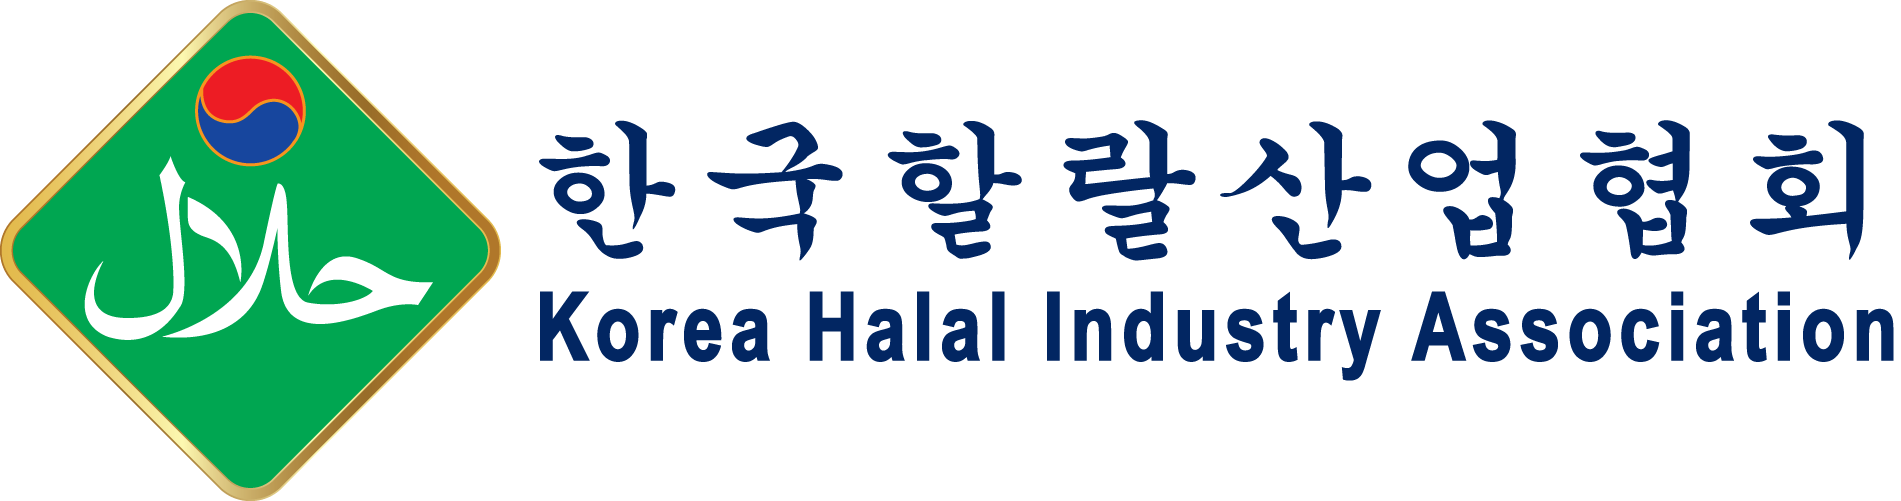 KOREA-HALAL-INDUSTRY-ASSOCIATION-4